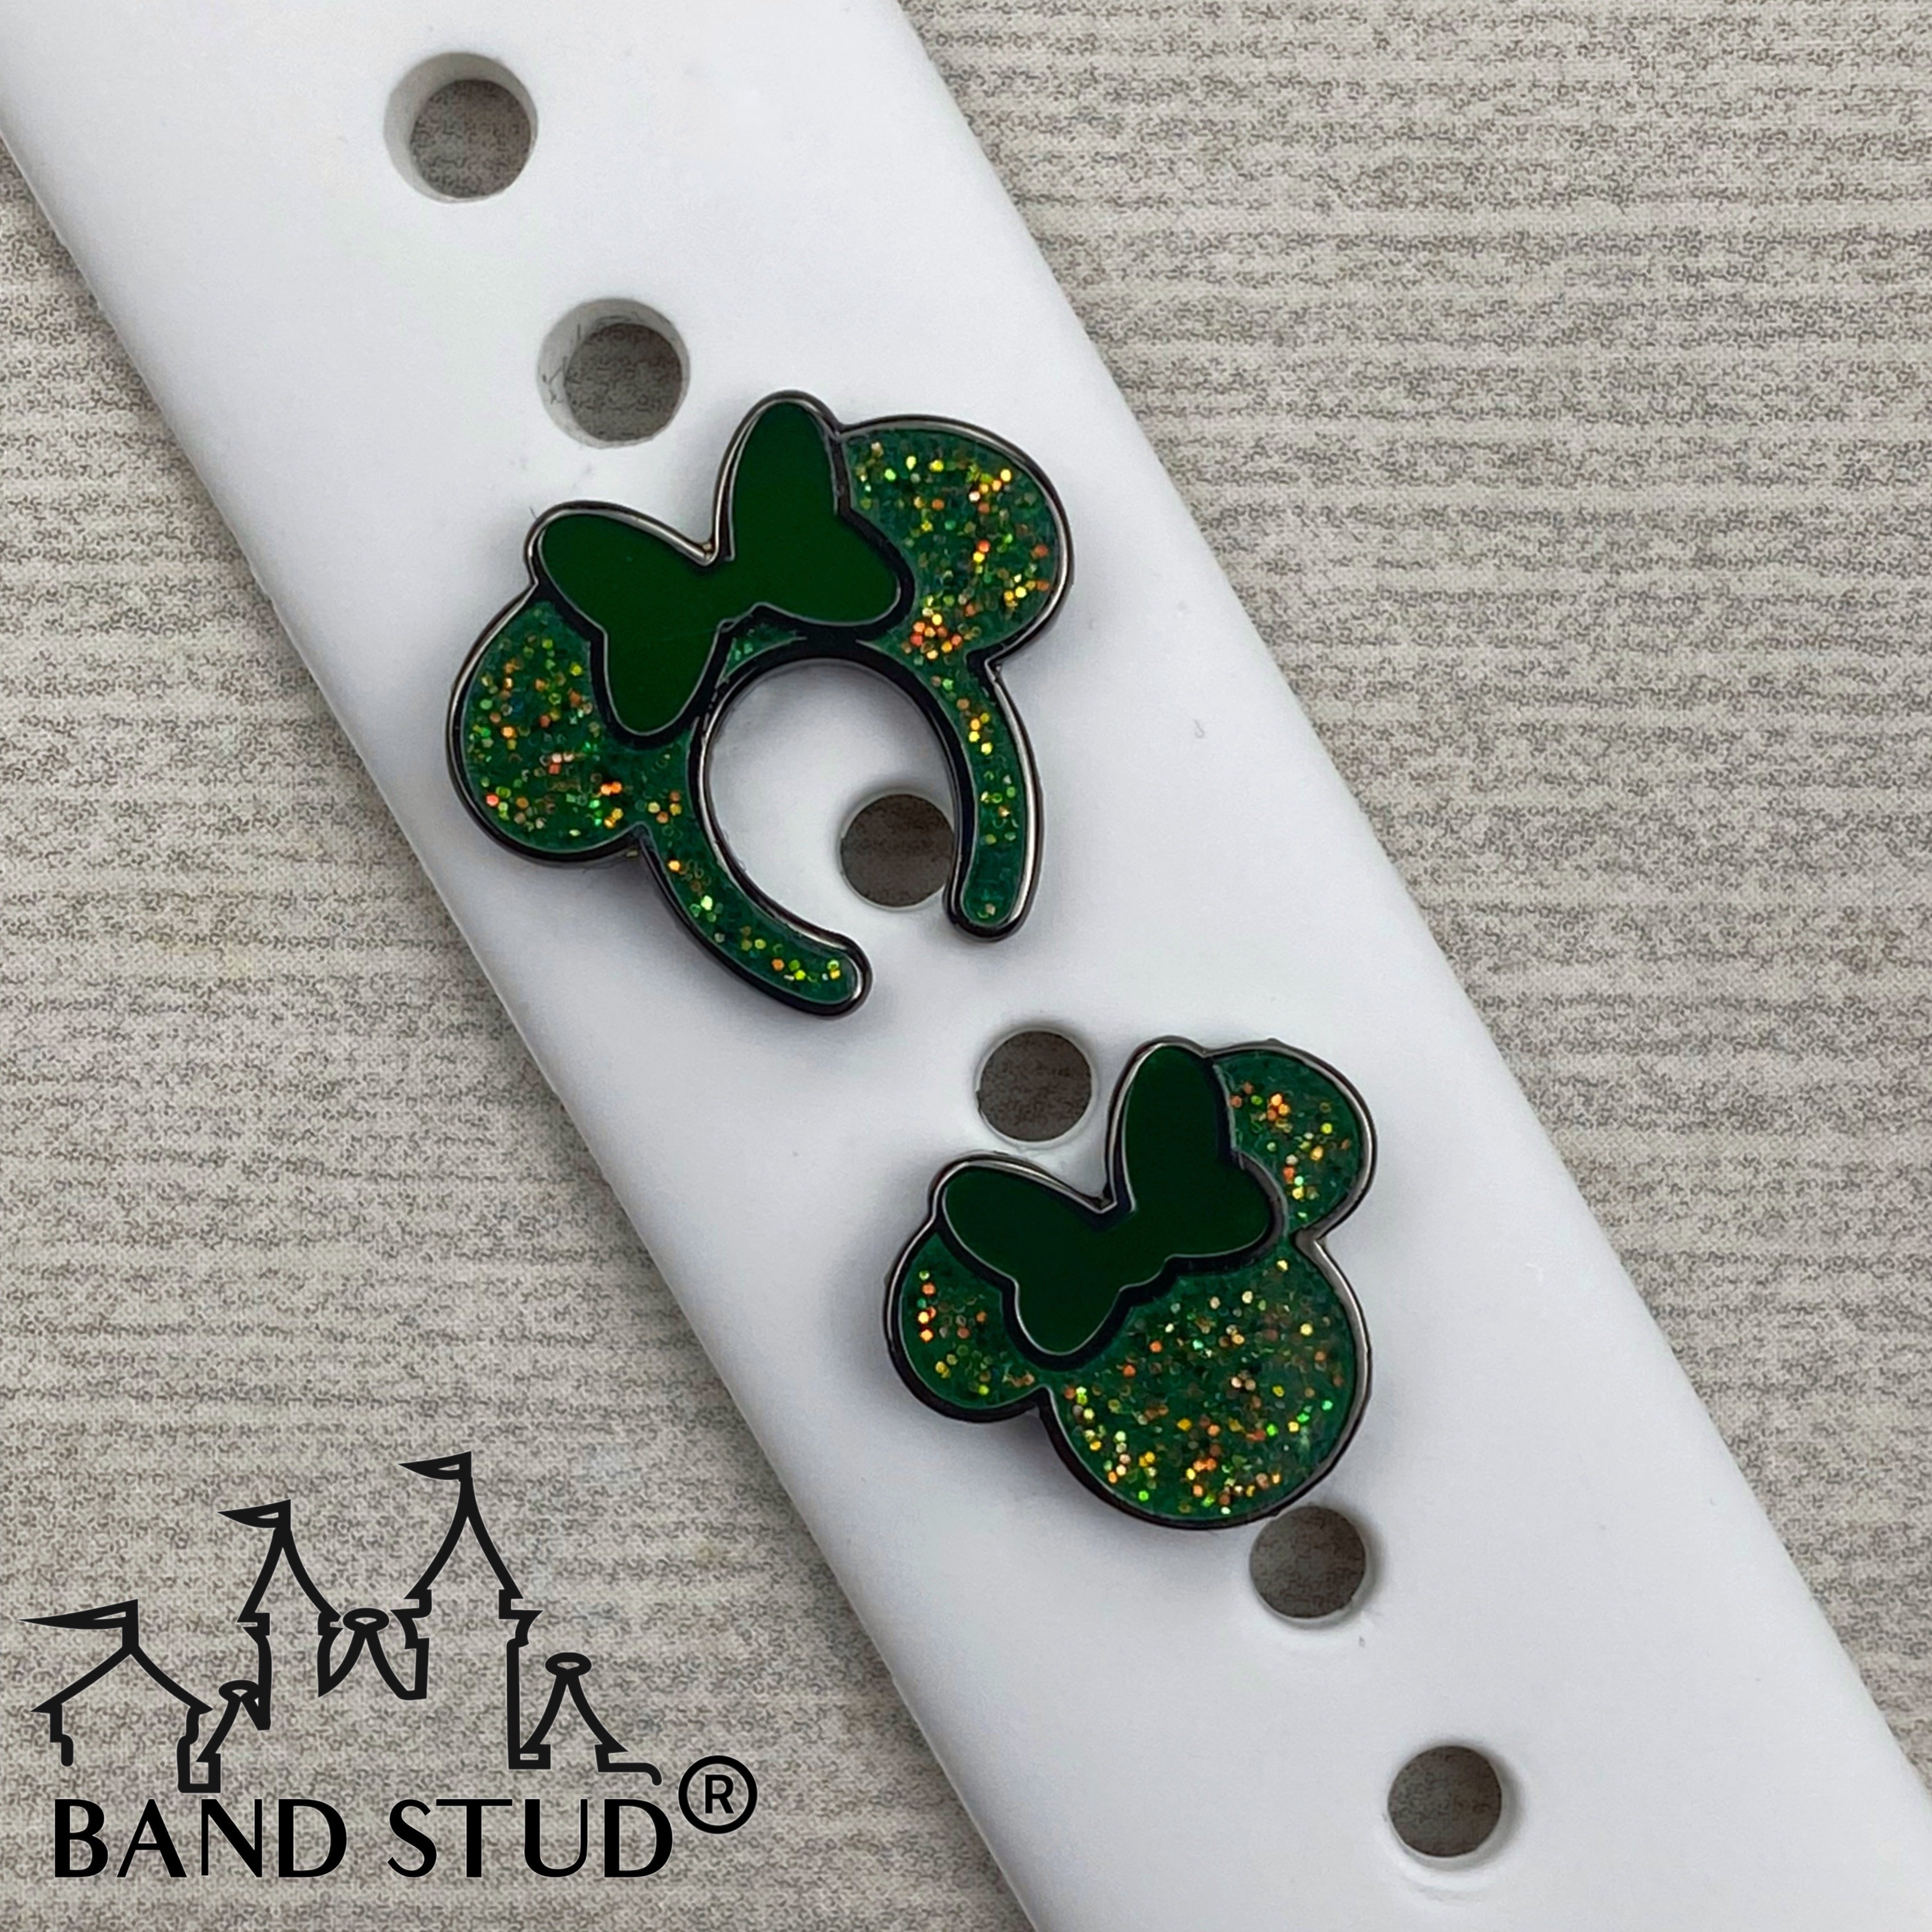 Band Stud® - Christmas Collection - Emerald Green Collection